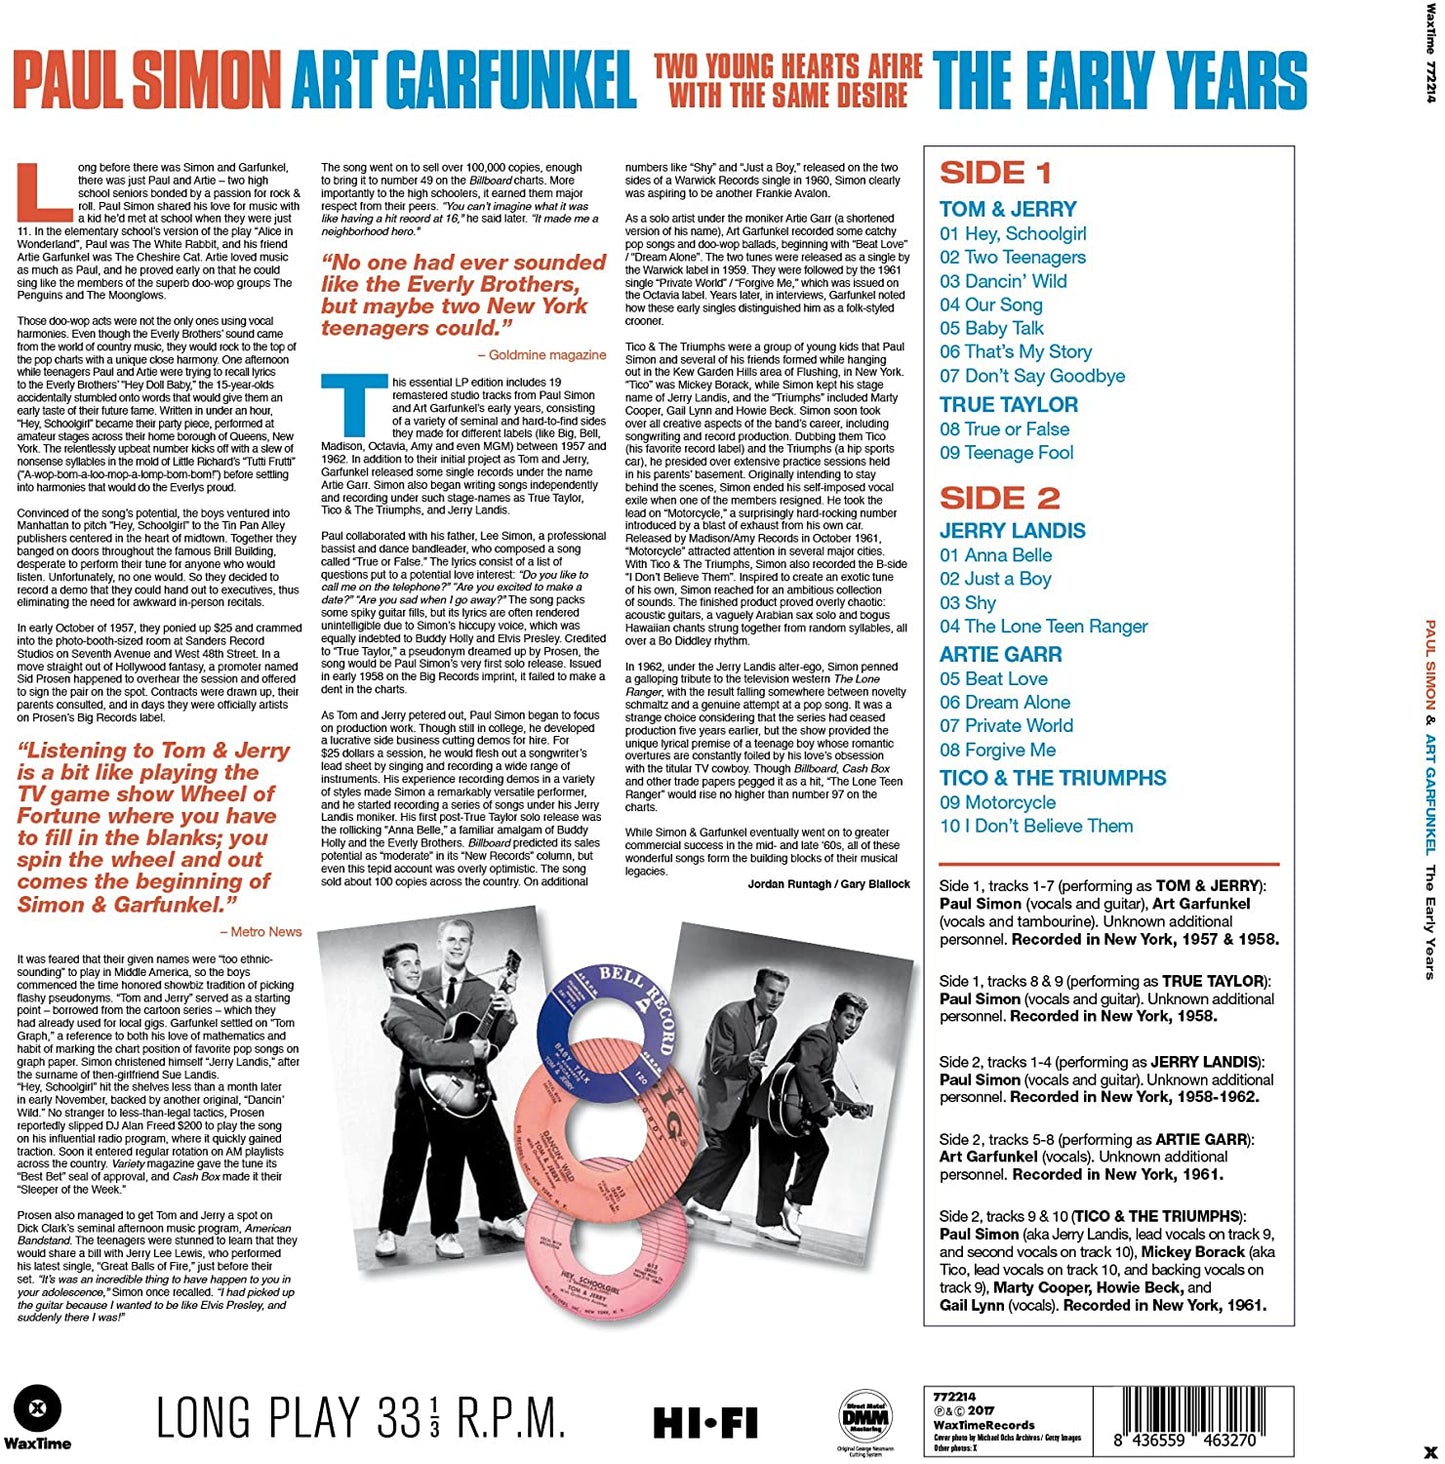 Simon, Paul & Garfunkel, Art/The Early Years [LP]